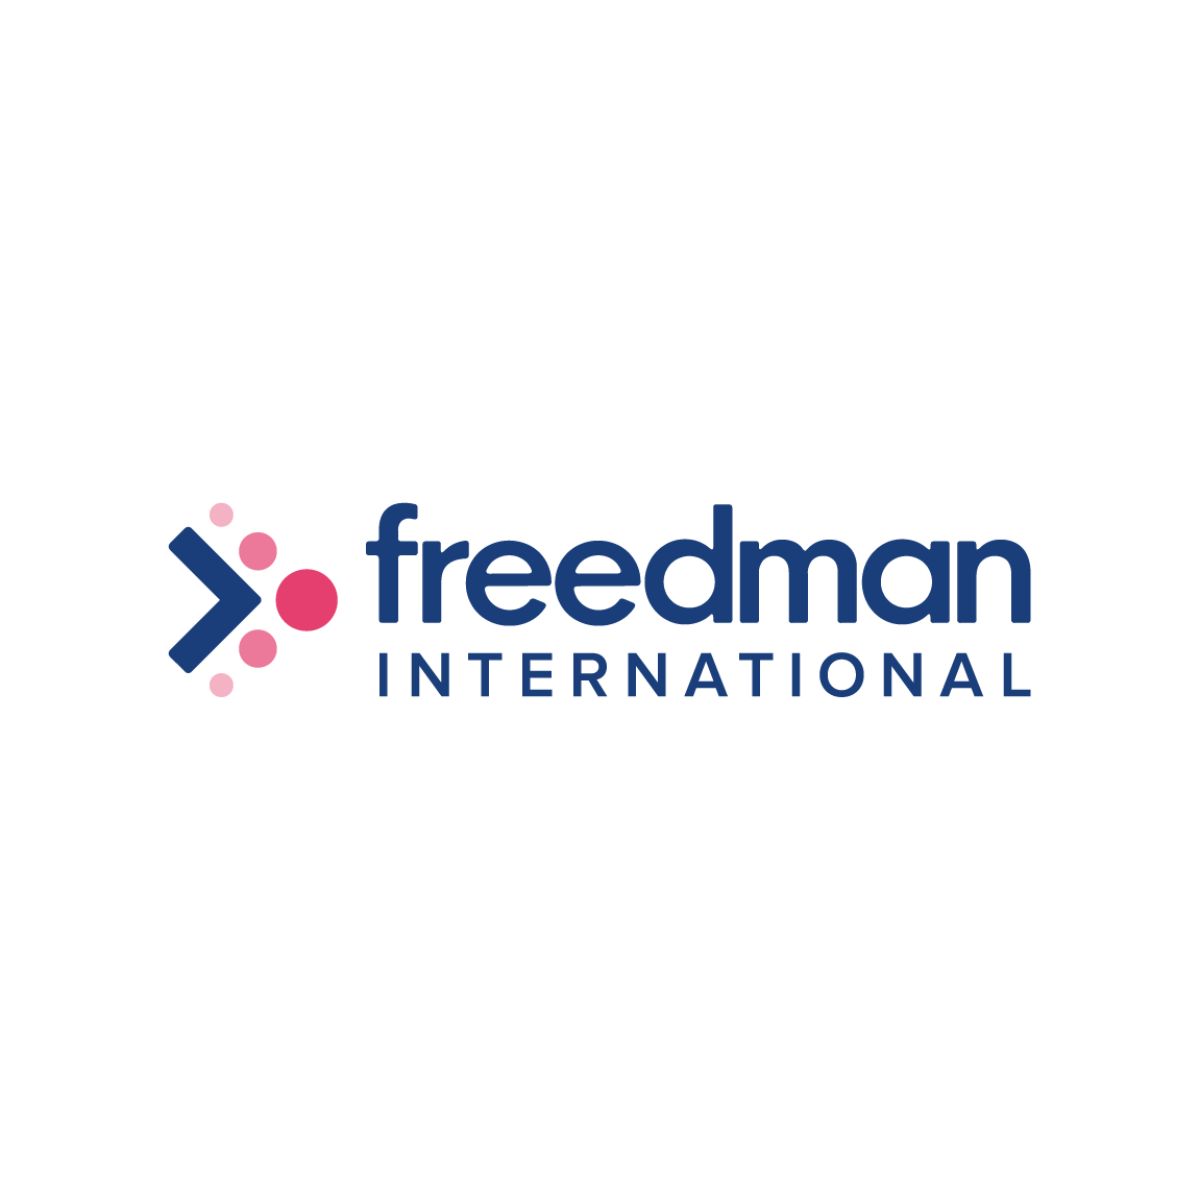 Freedman International